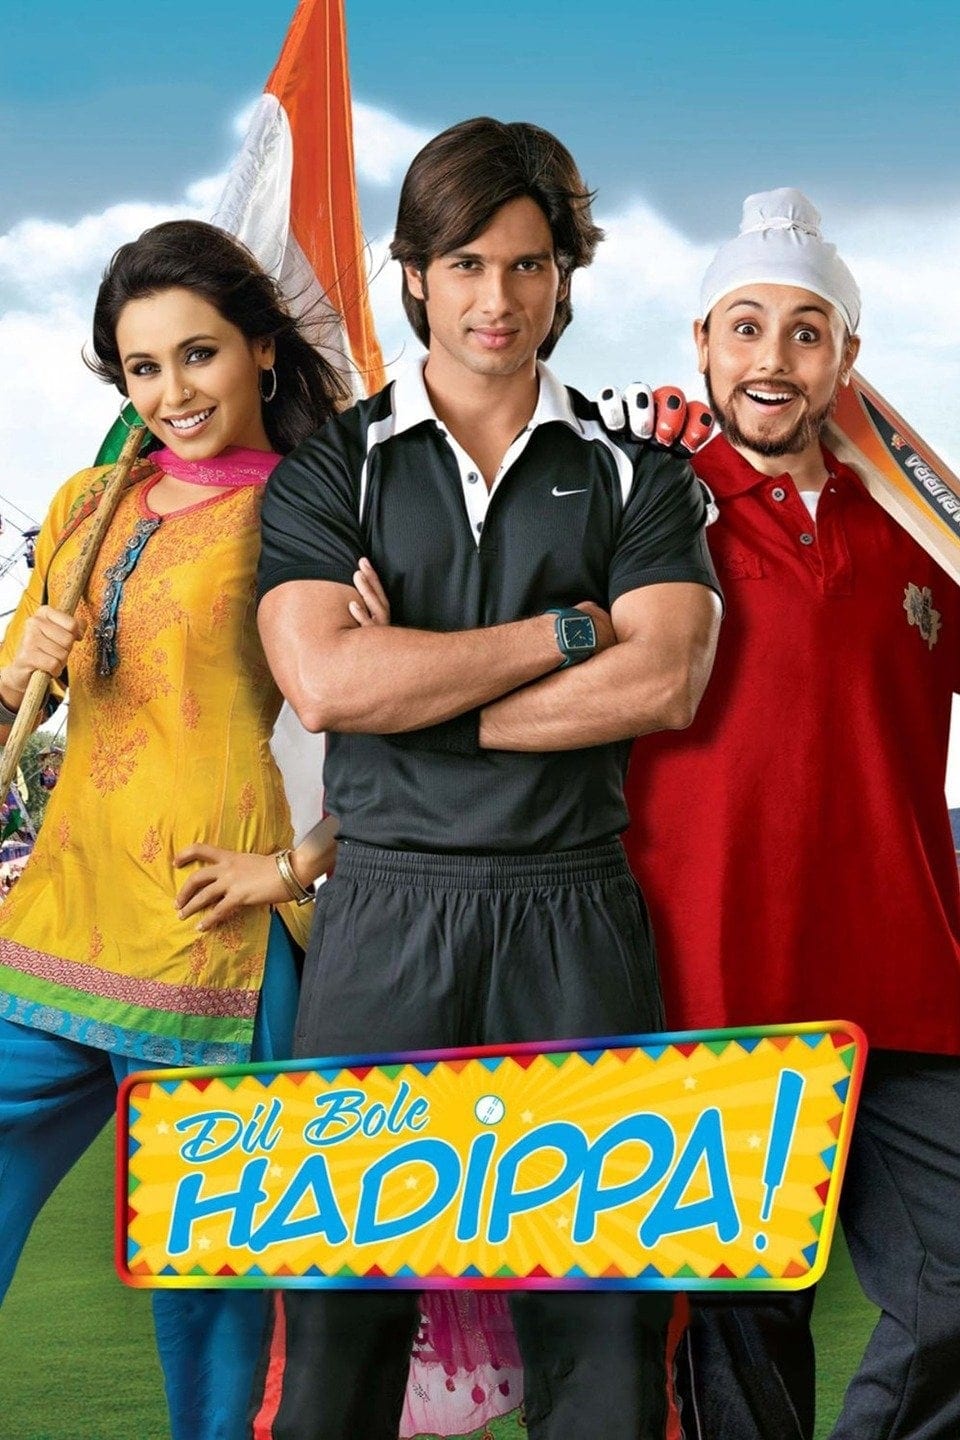 Poster for the movie "Dil Bole Hadippa!"